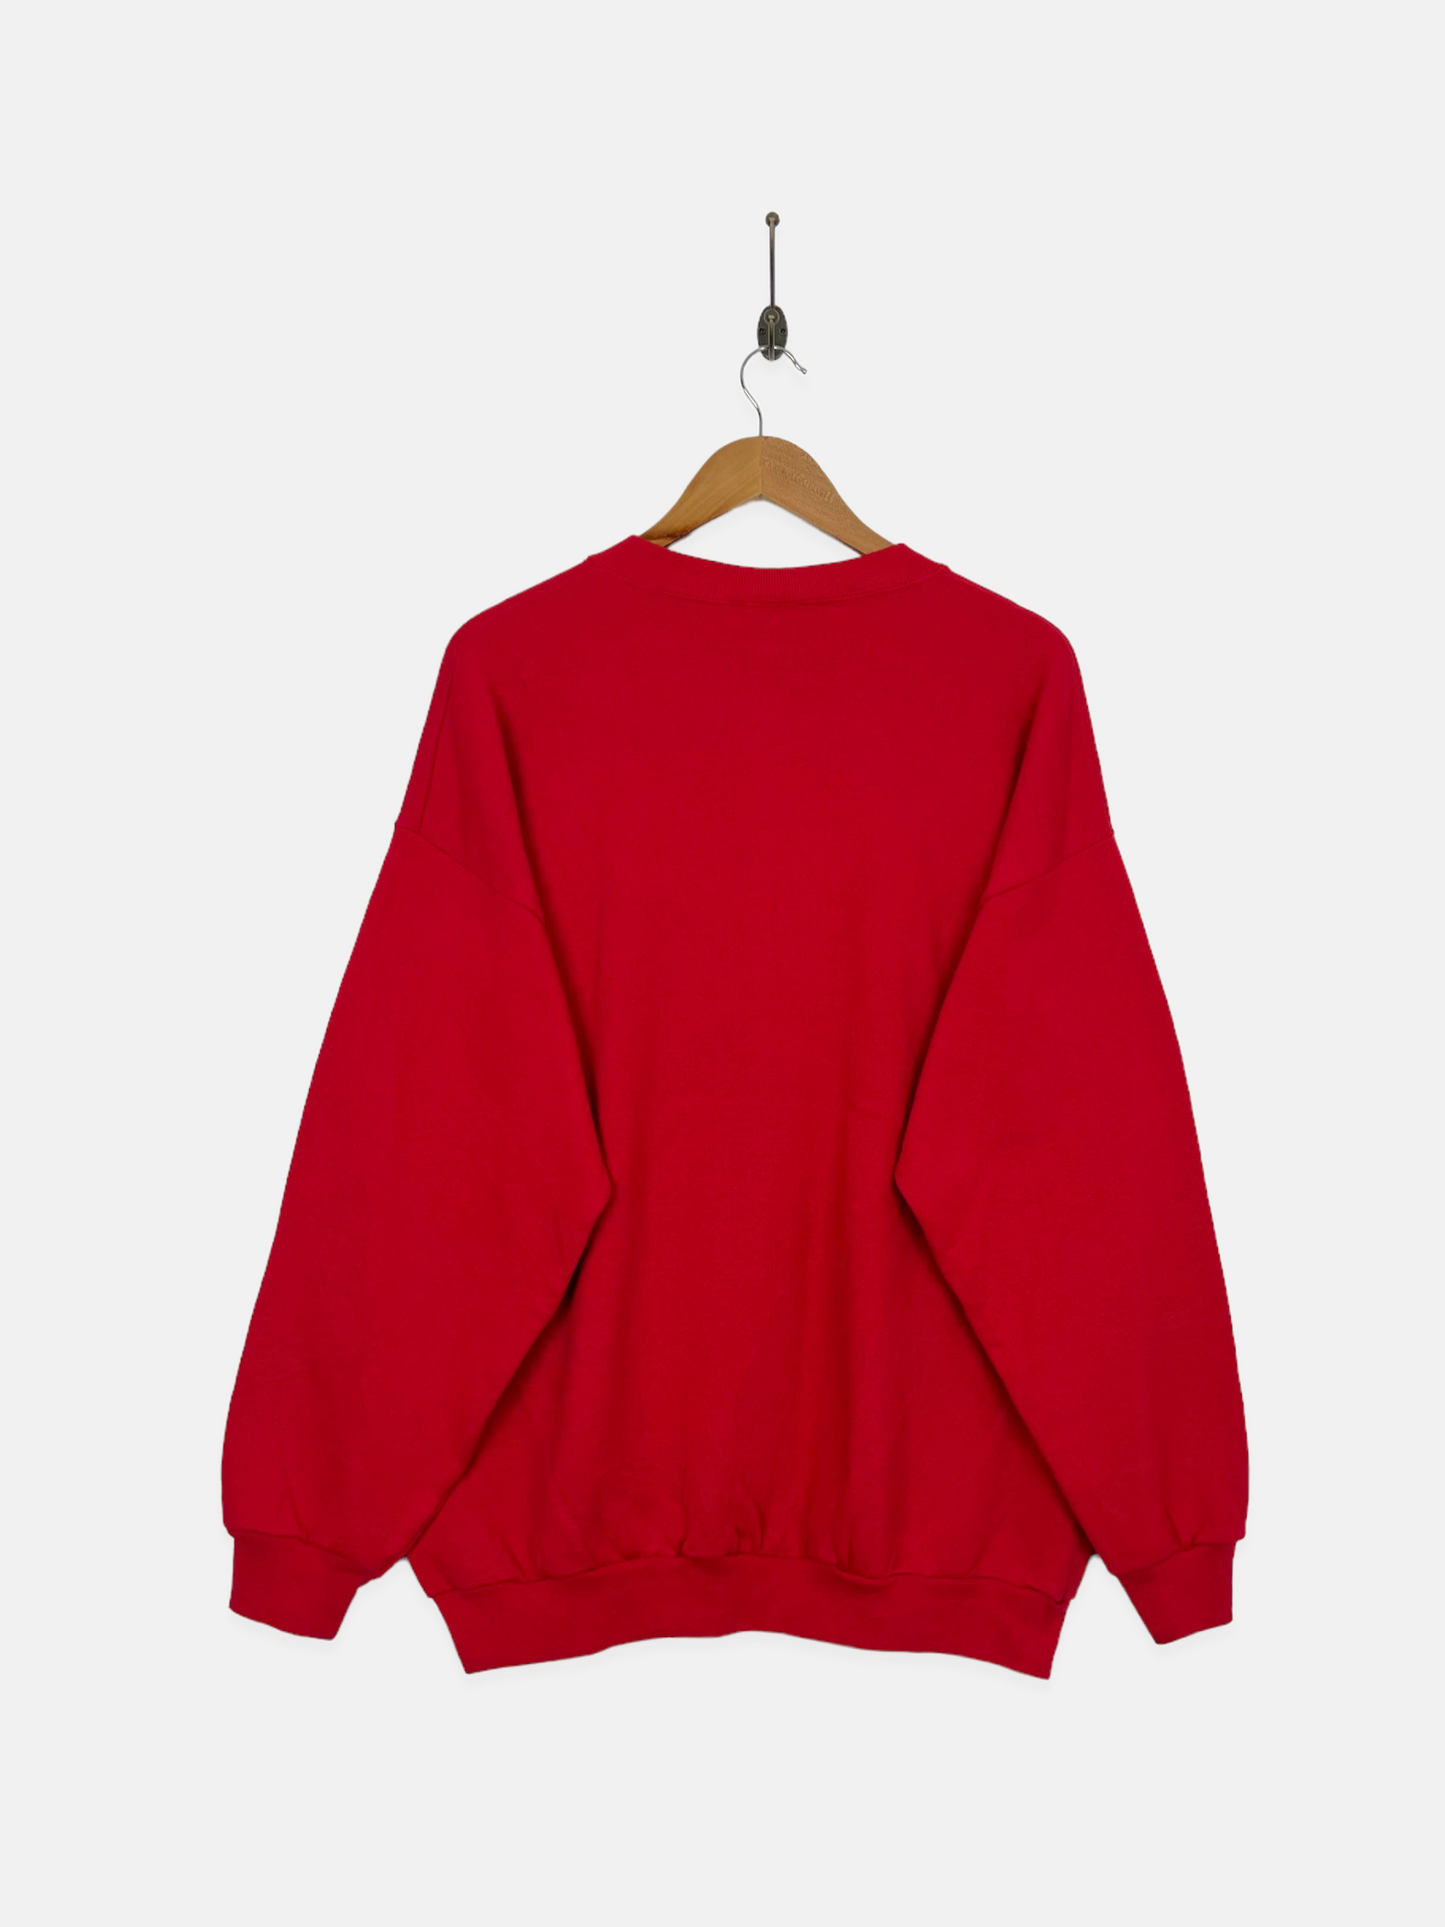 90's Nebraska Huskers Embroidered Vintage Sweatshirt Size XL